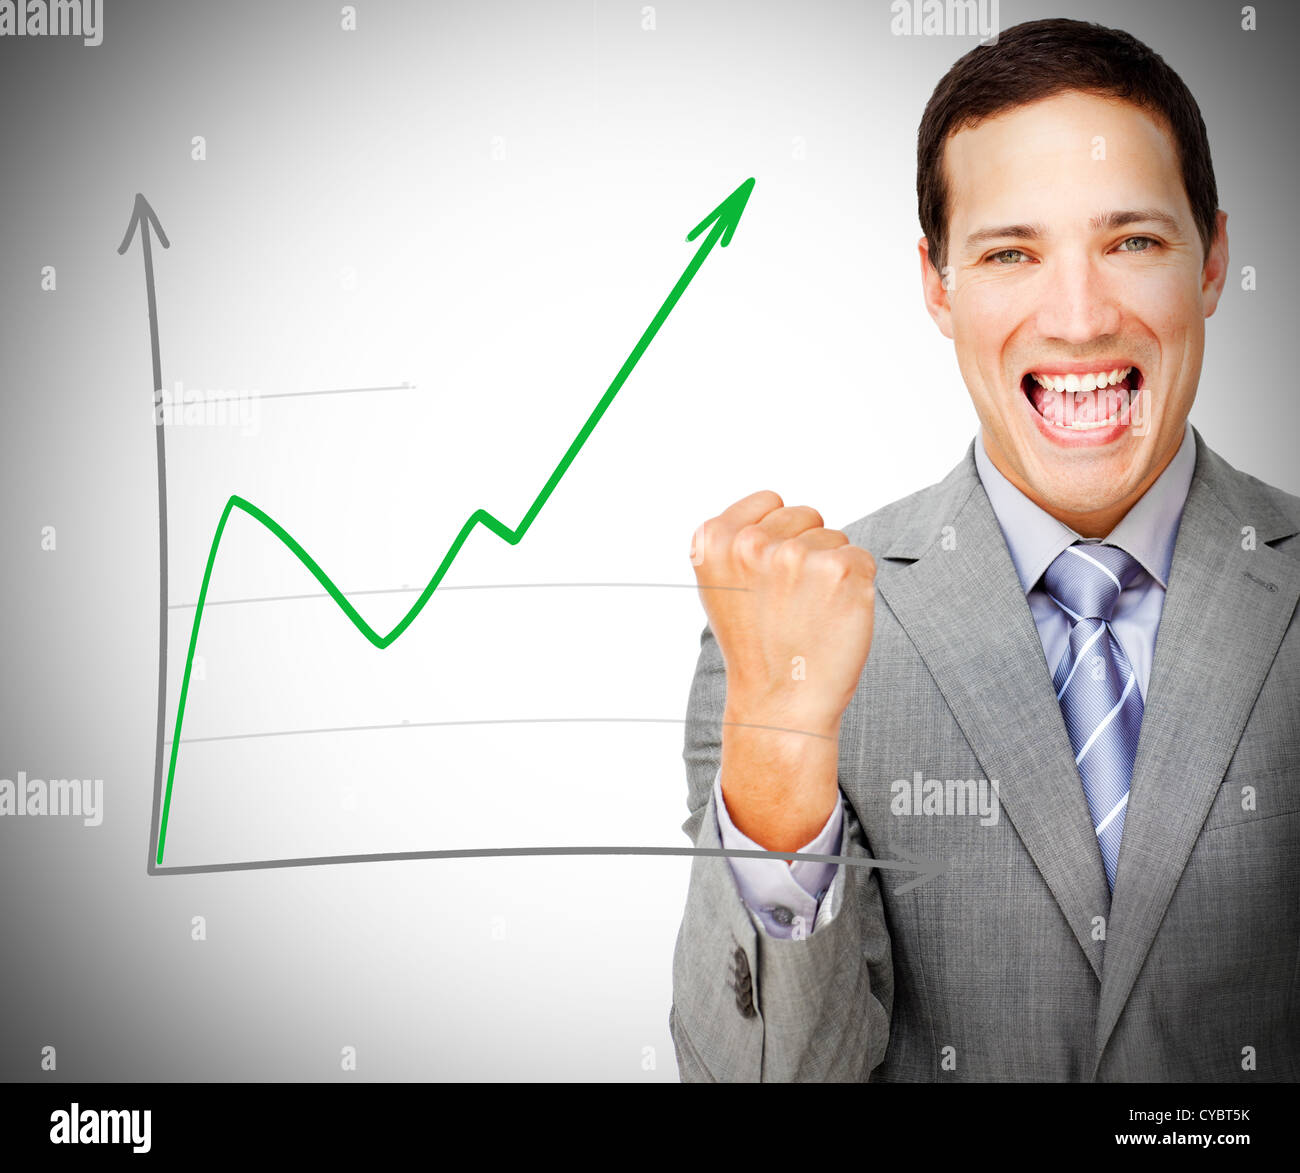 Businessman celebrating behind increasing graph Stock Photo